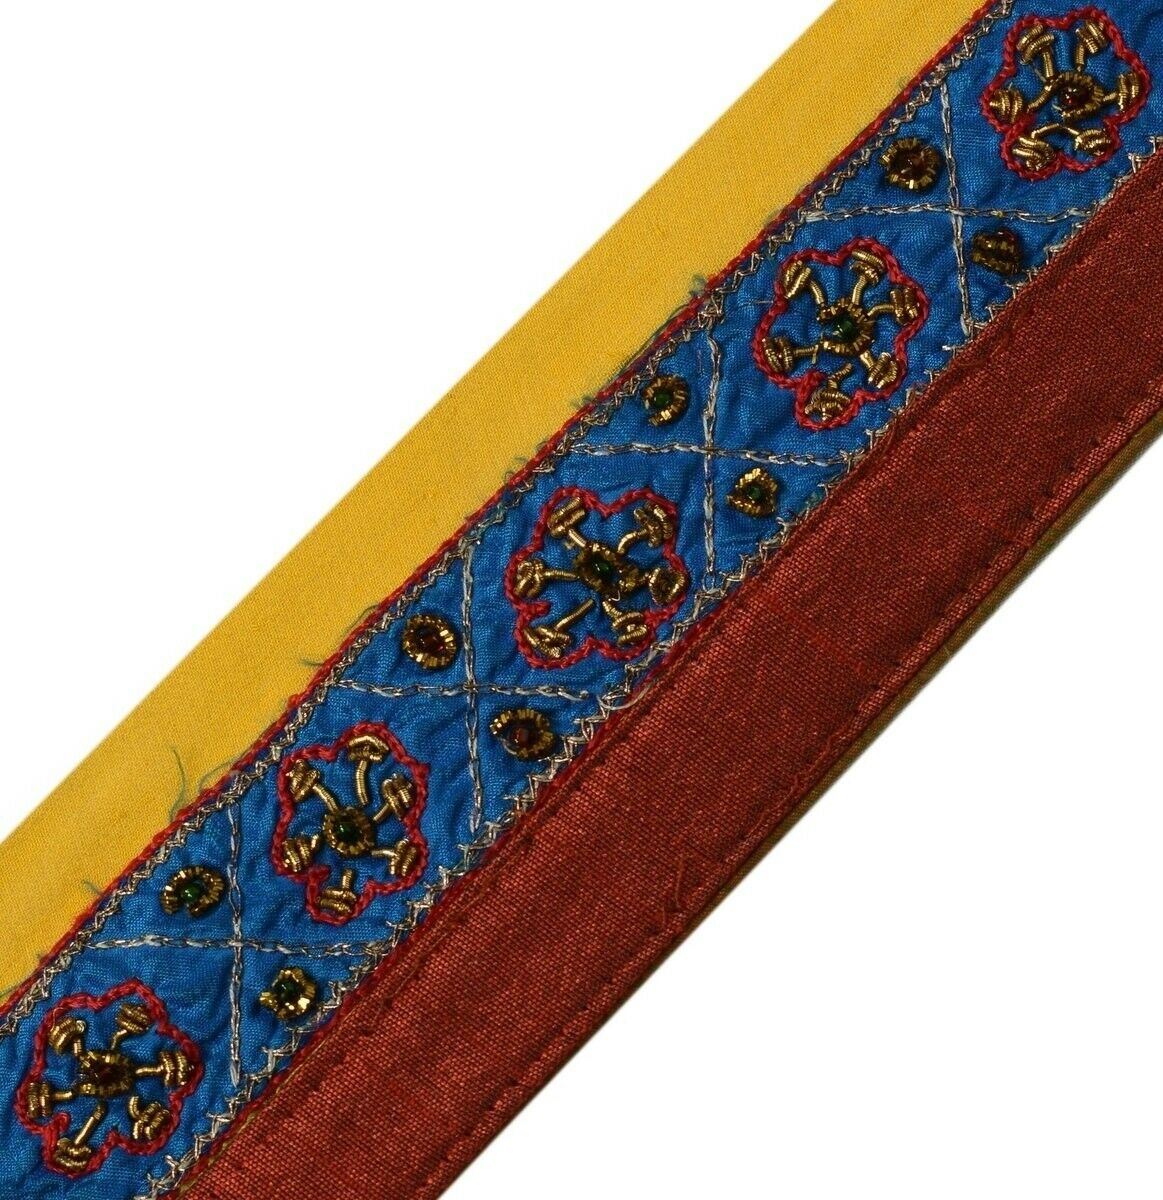 Vintage Sari Border Indian Craft Trim Beaded Embroidered Ribbon Lace Blue Maroon